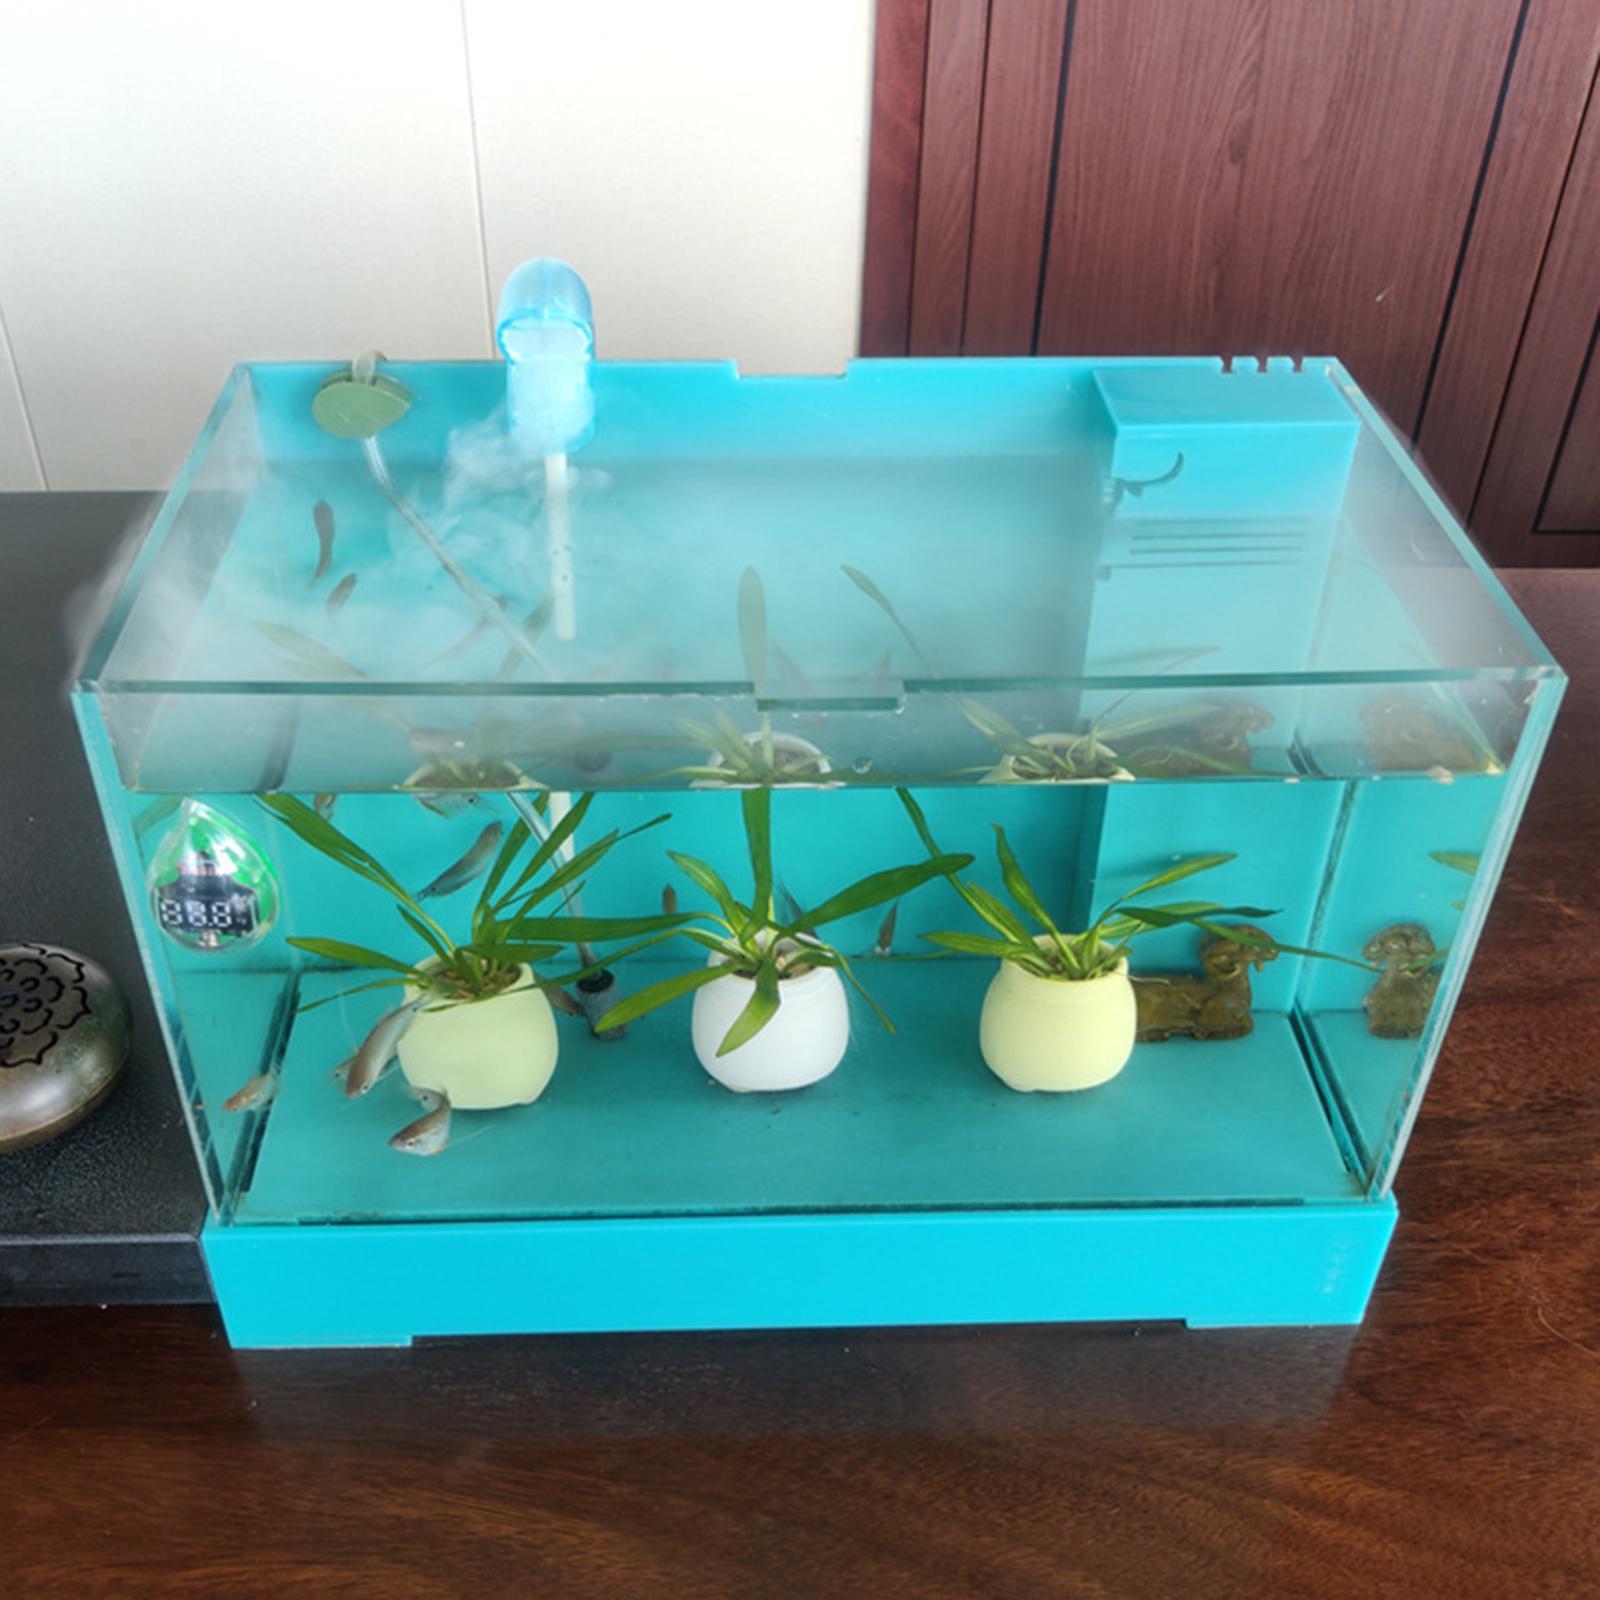 Aquarium Water Clean Skimmer Filters Water Cleaning Turtle Tank Accessories